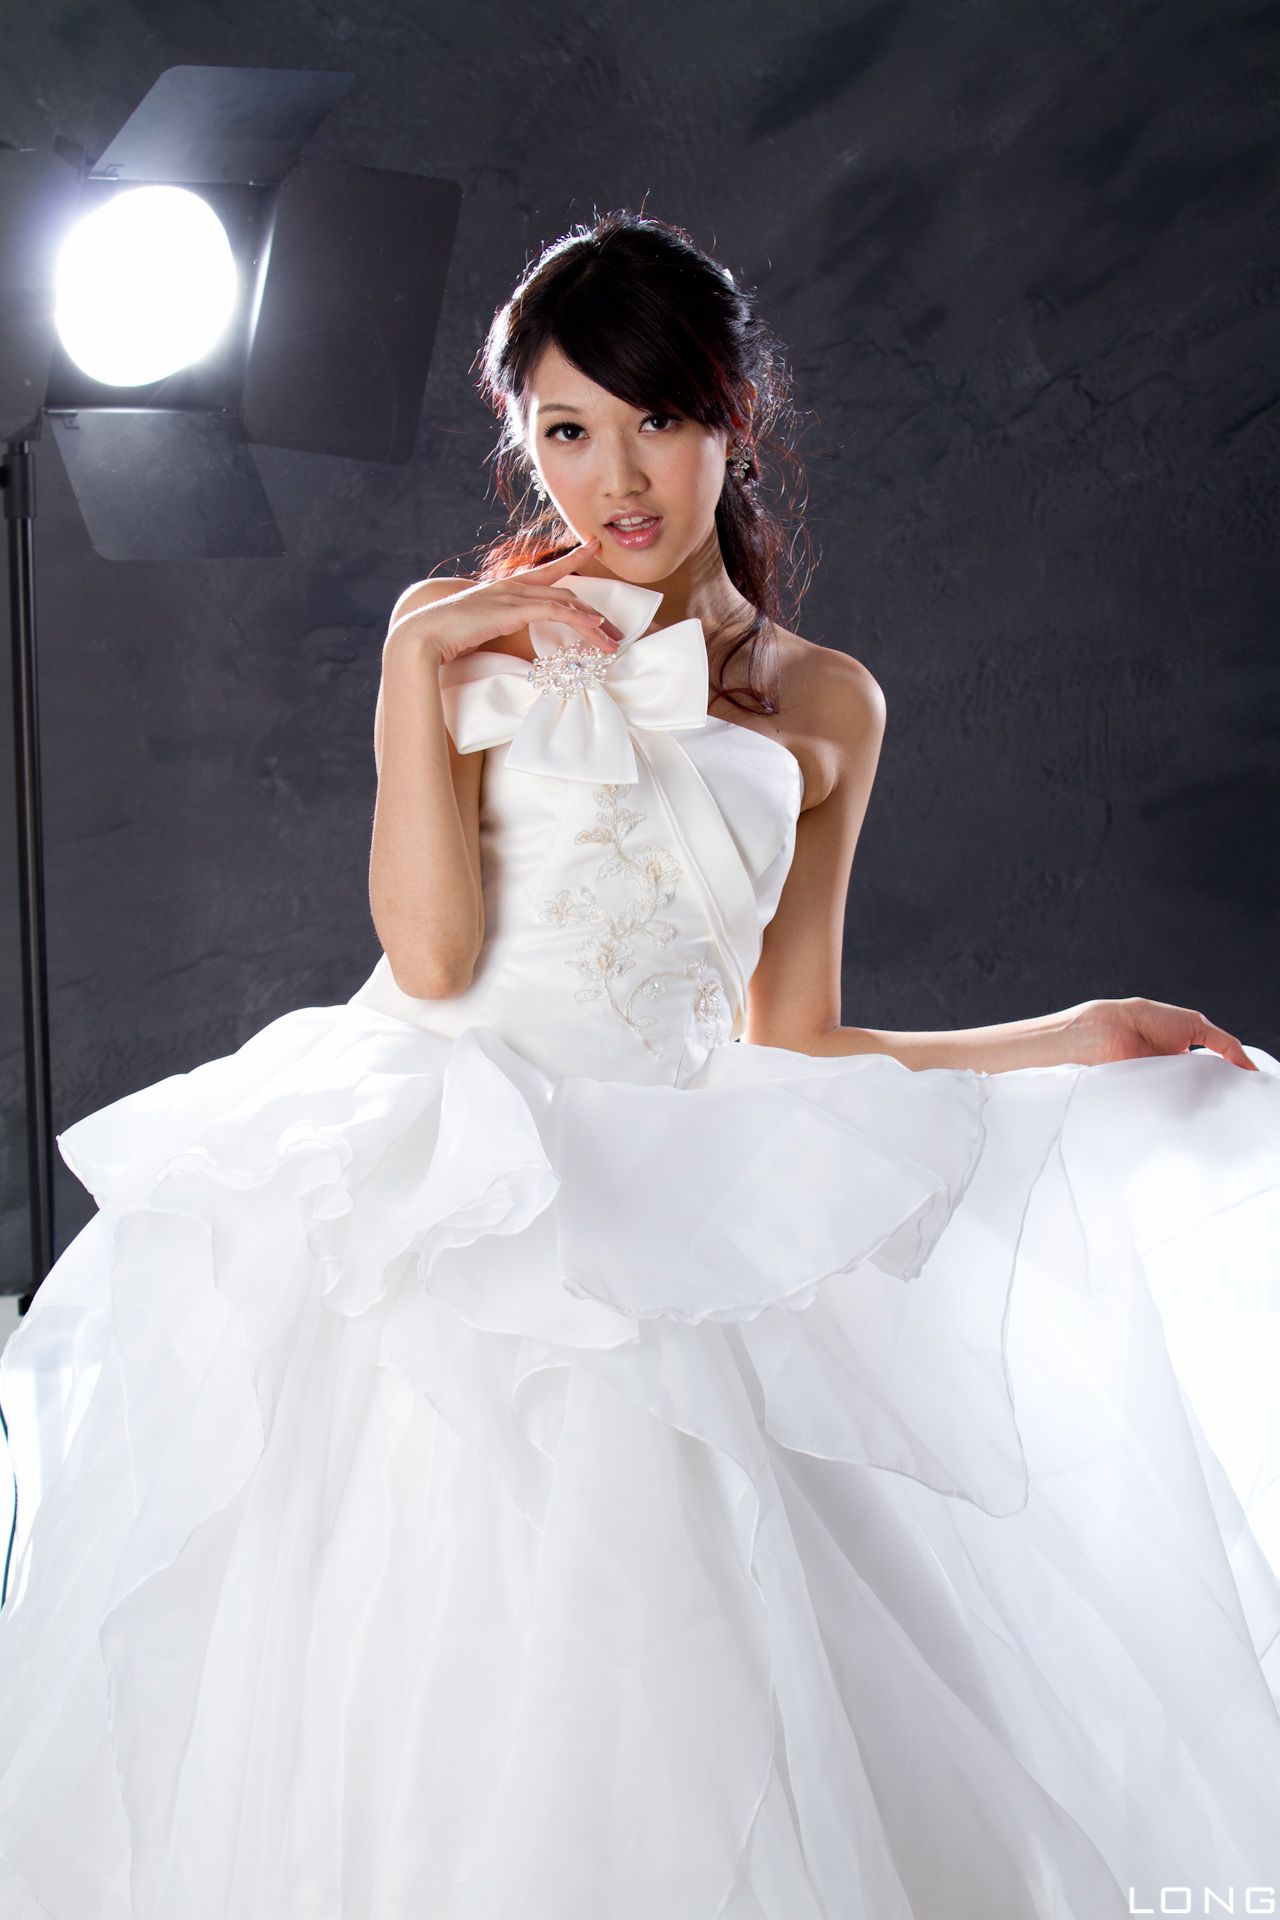 Taiwanese beauty model Chen Yuting Jill “Wedding Die” Photo Collection